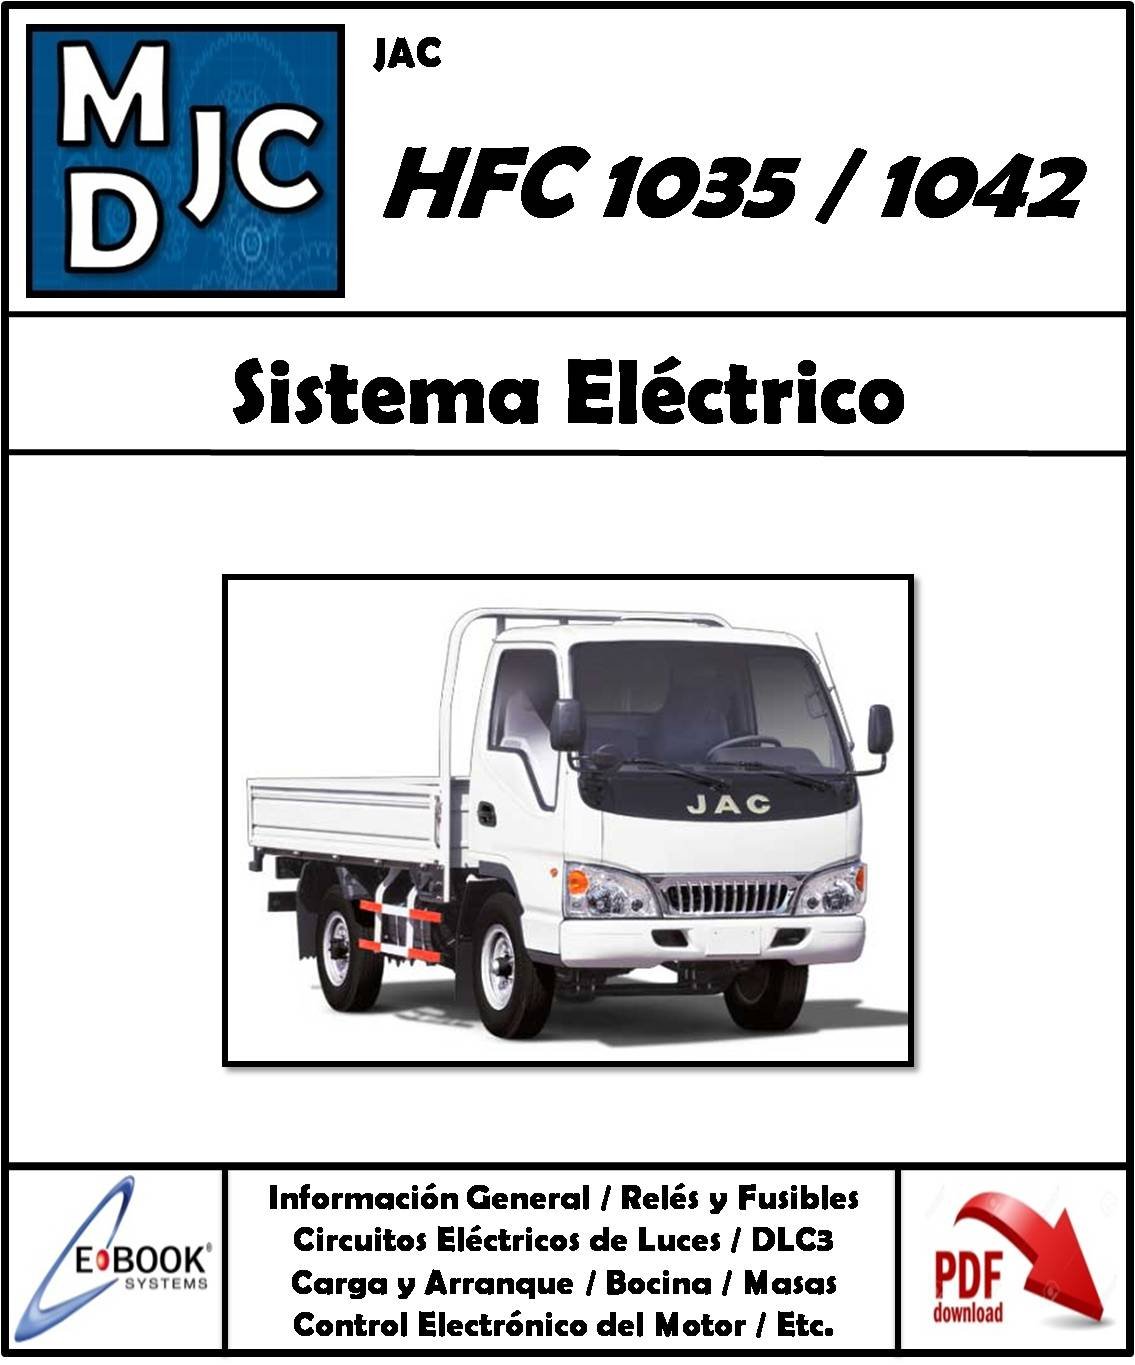 JAC HFC 1035 / 1042